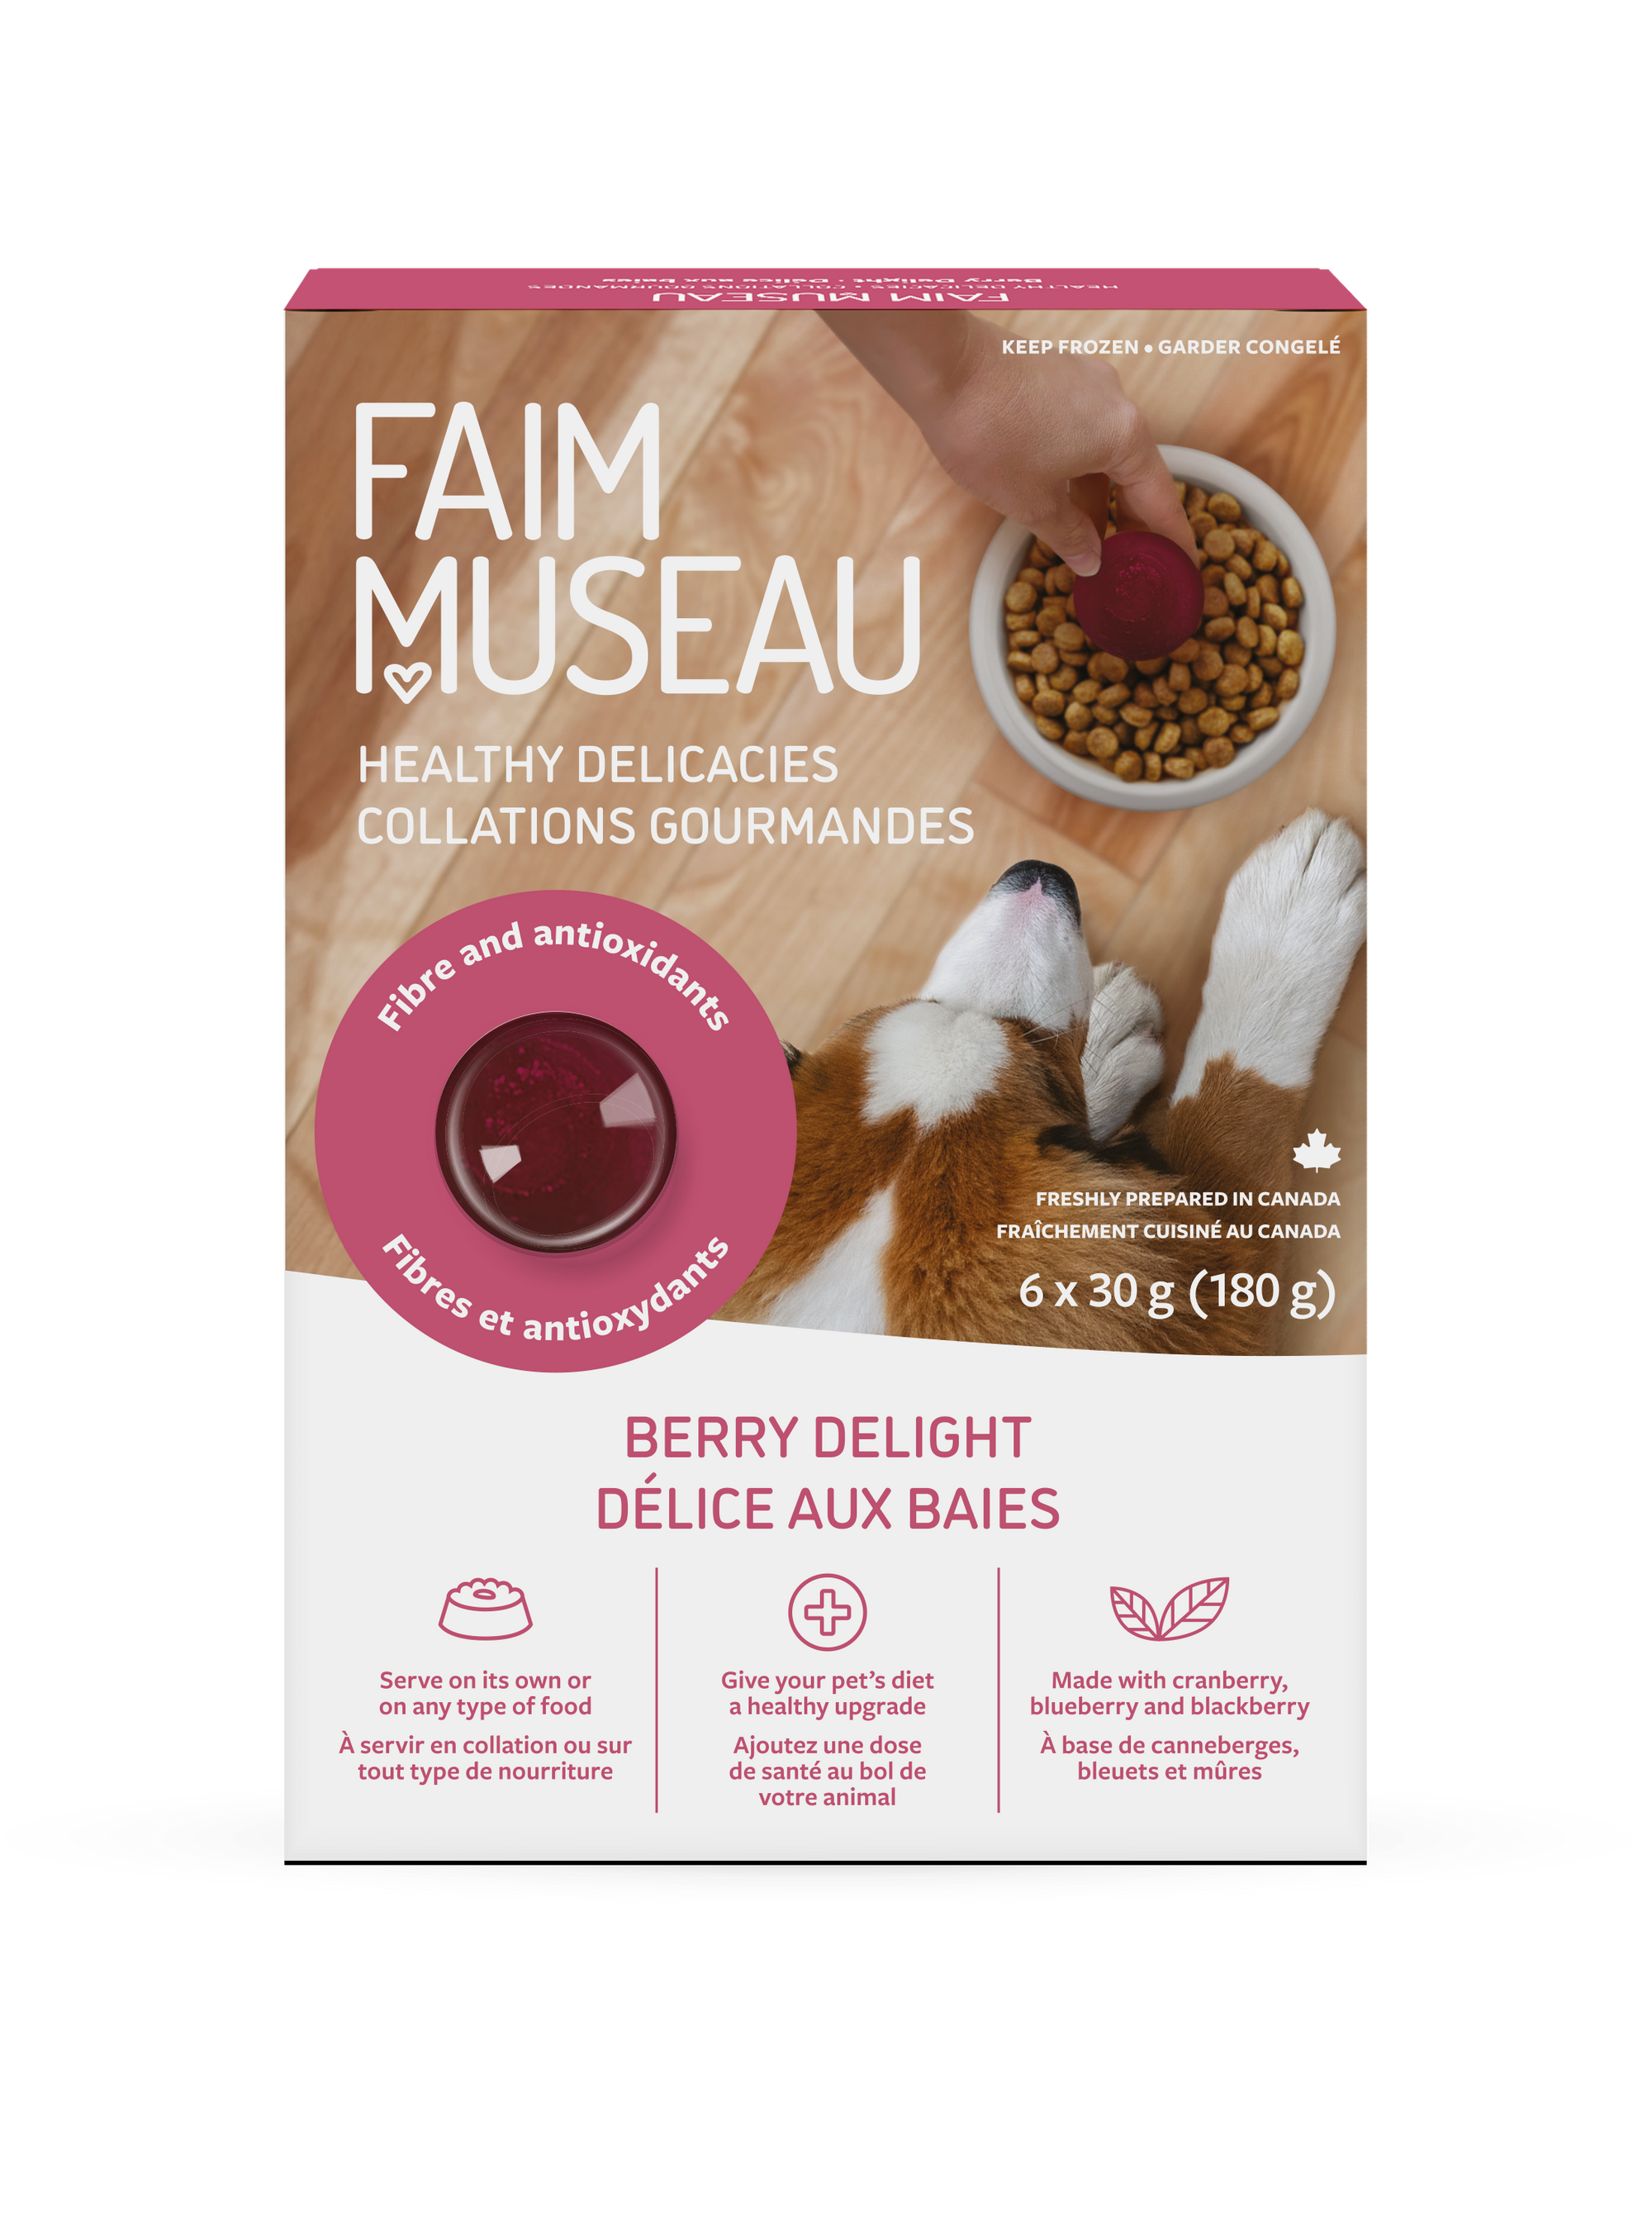 Faim Museau Berry delights 6 x 30g (180g)